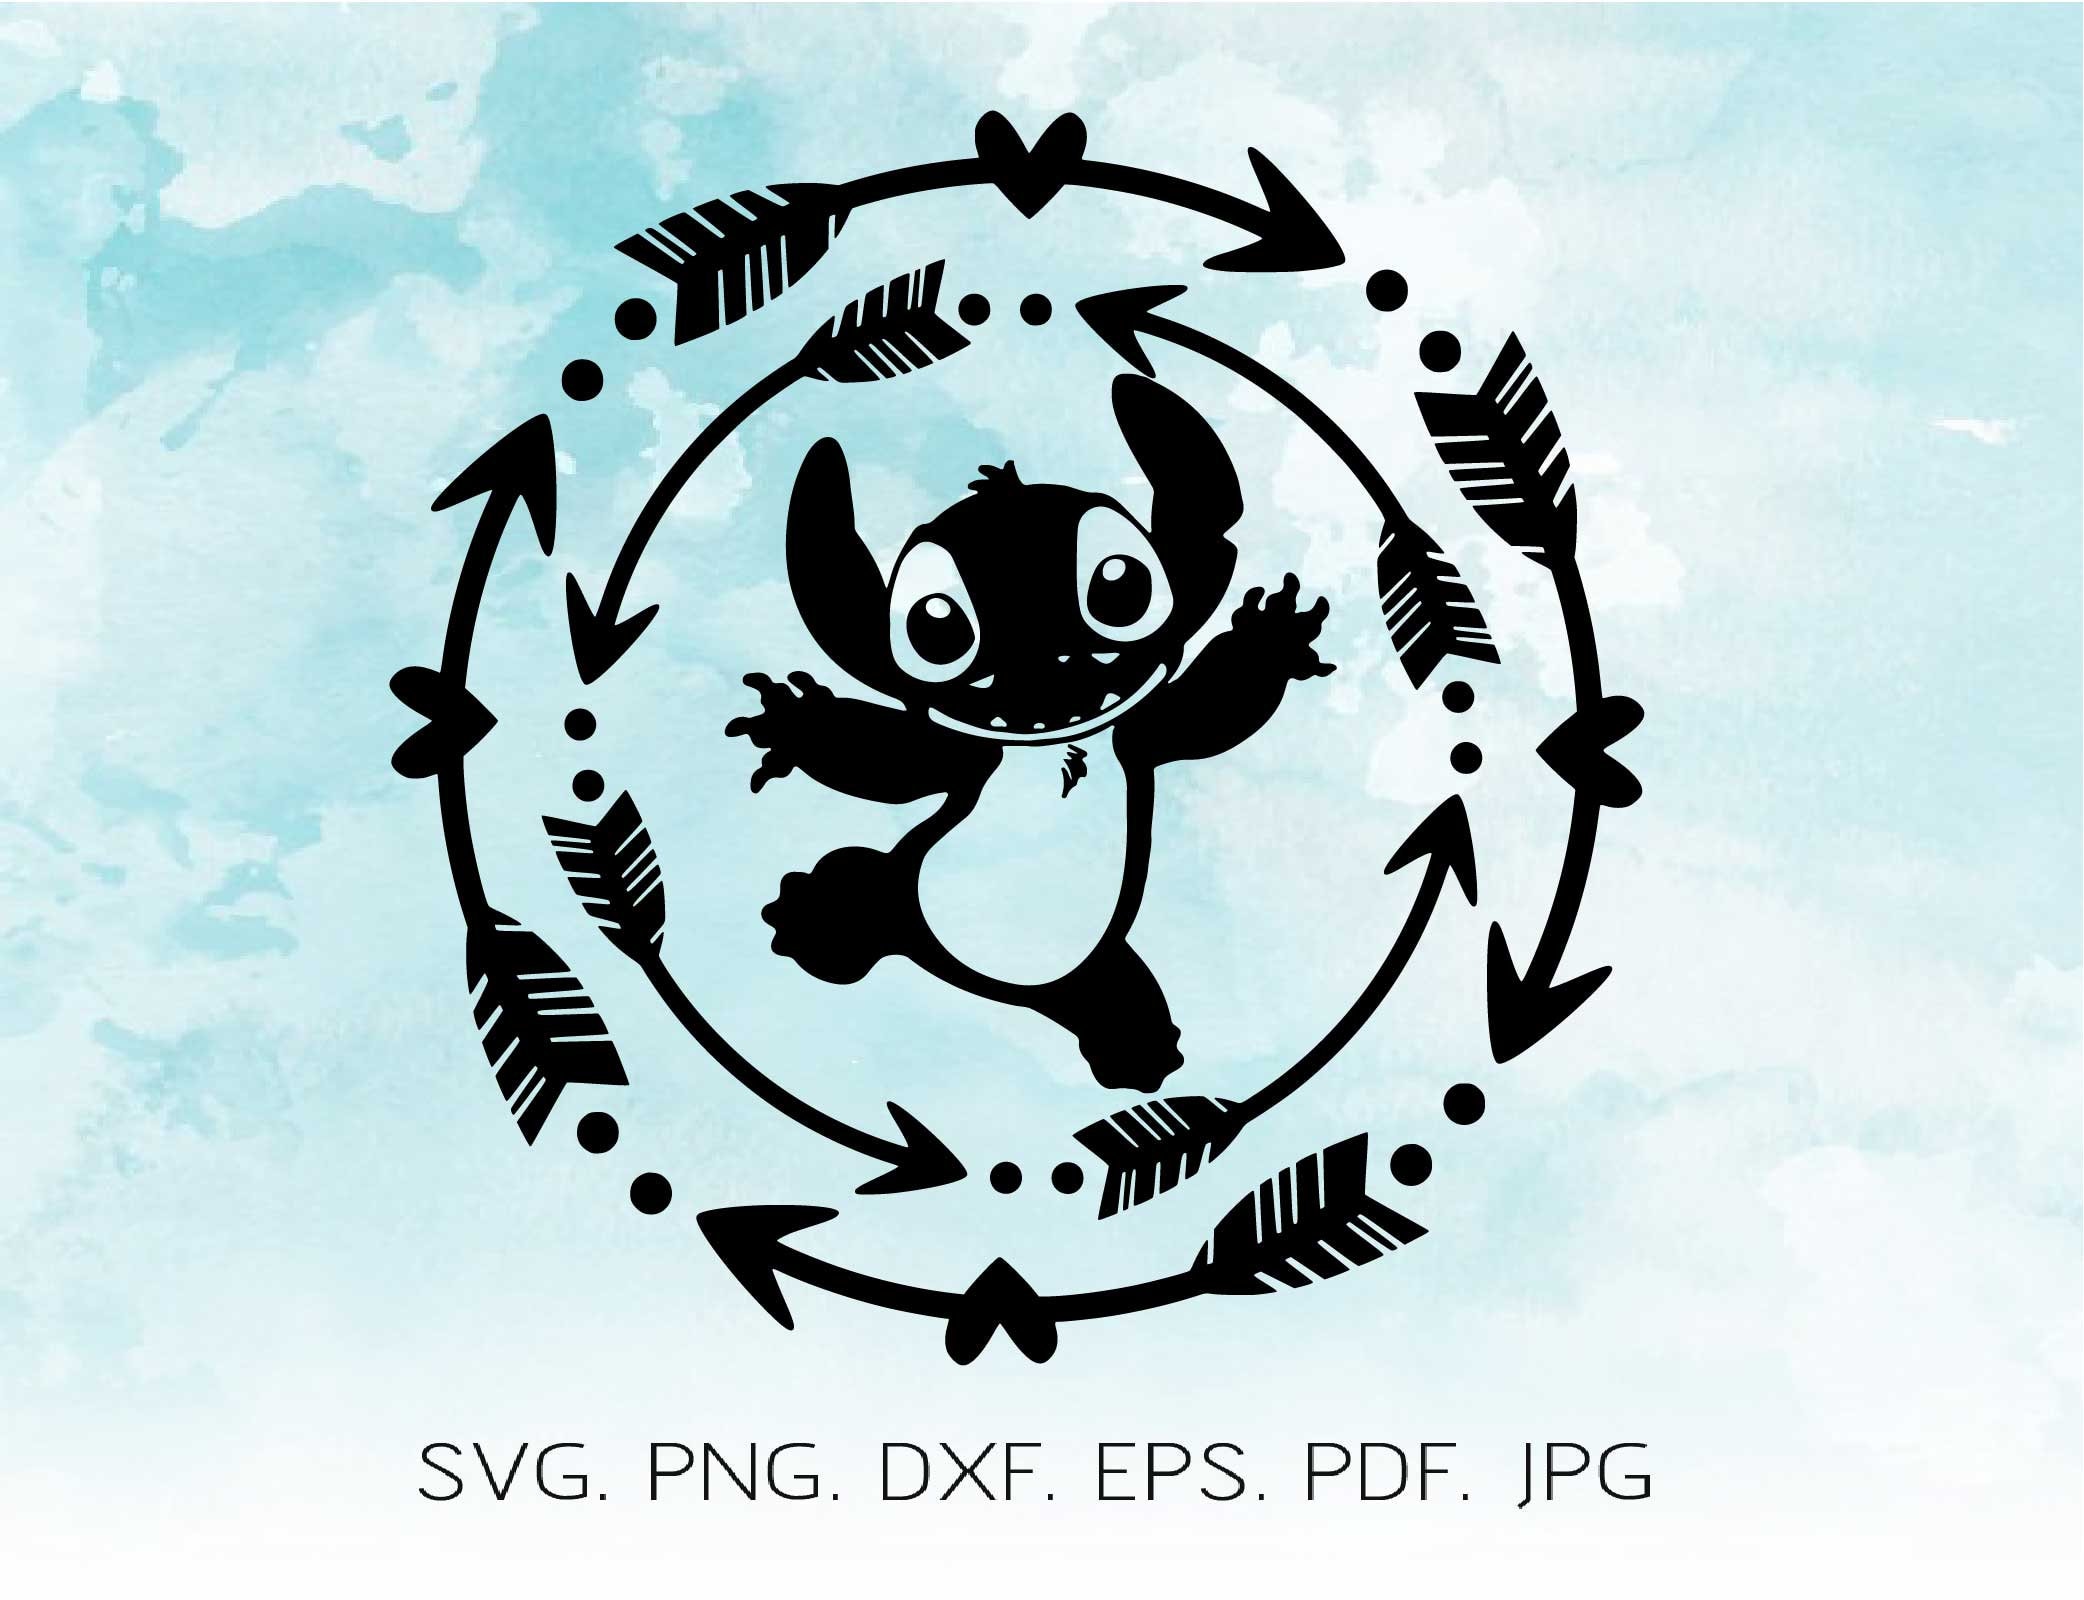 Download Stitch Svg Lilo And Stitch Svg Disney Svg Stitch Silhouette Etsy